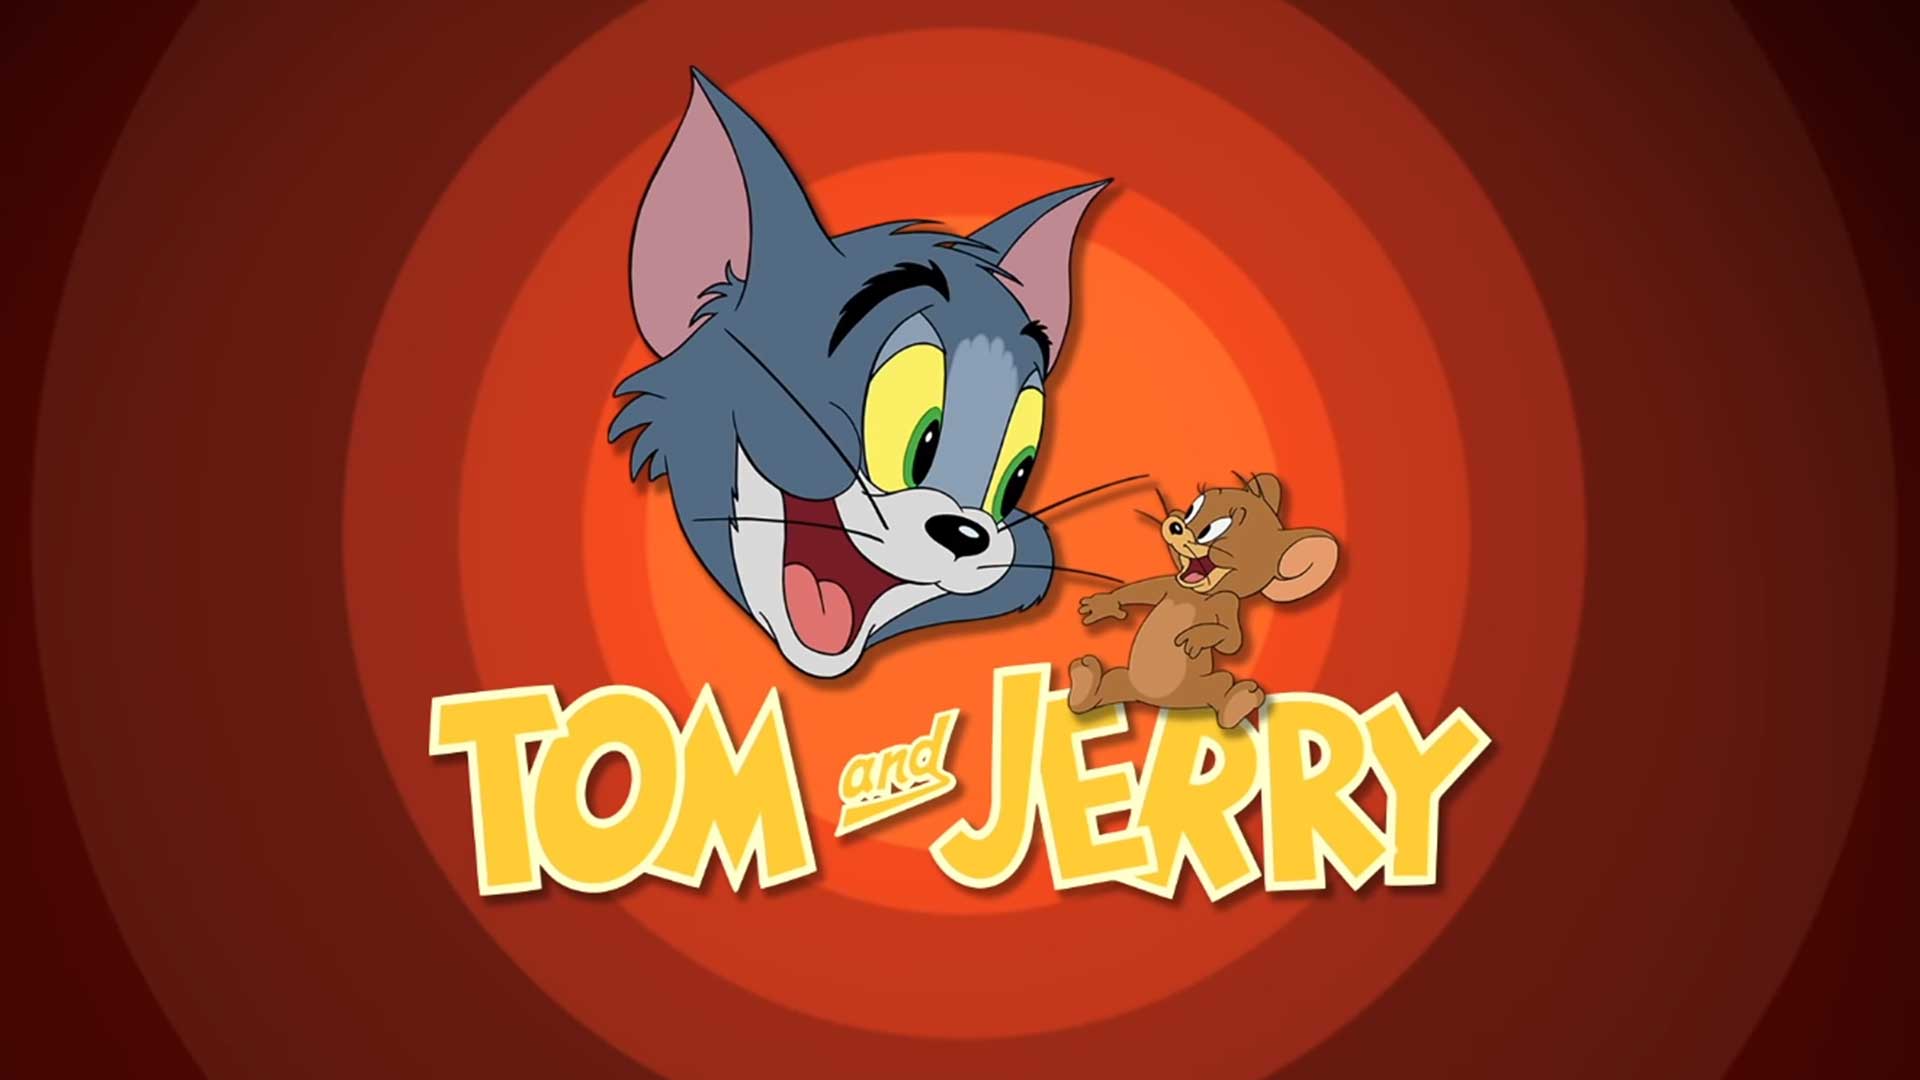 Том и Джерри – 41 серия «Беда на свою голову» / Tom and Jerry